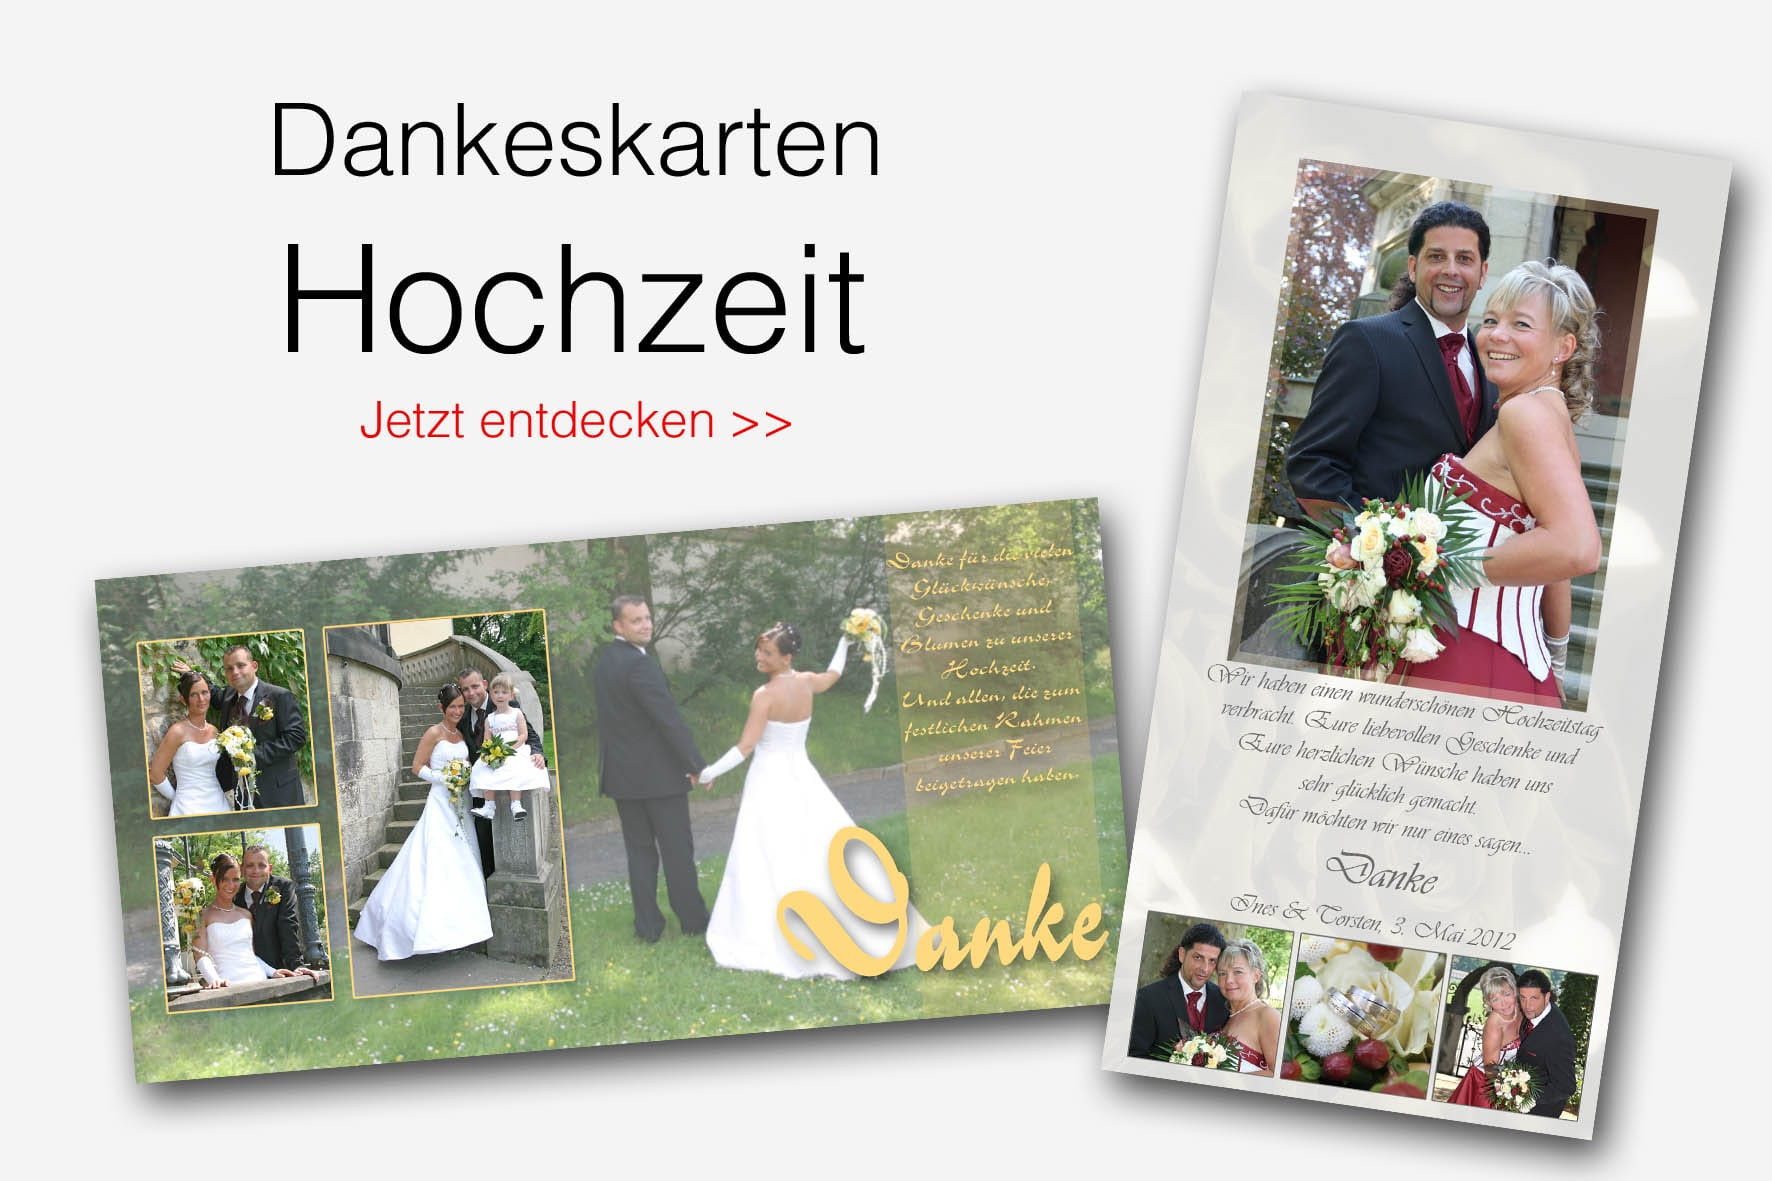 Dankeskarten Hochzeit
 Danksagungen Dankeskarten & Einladungen bestellen